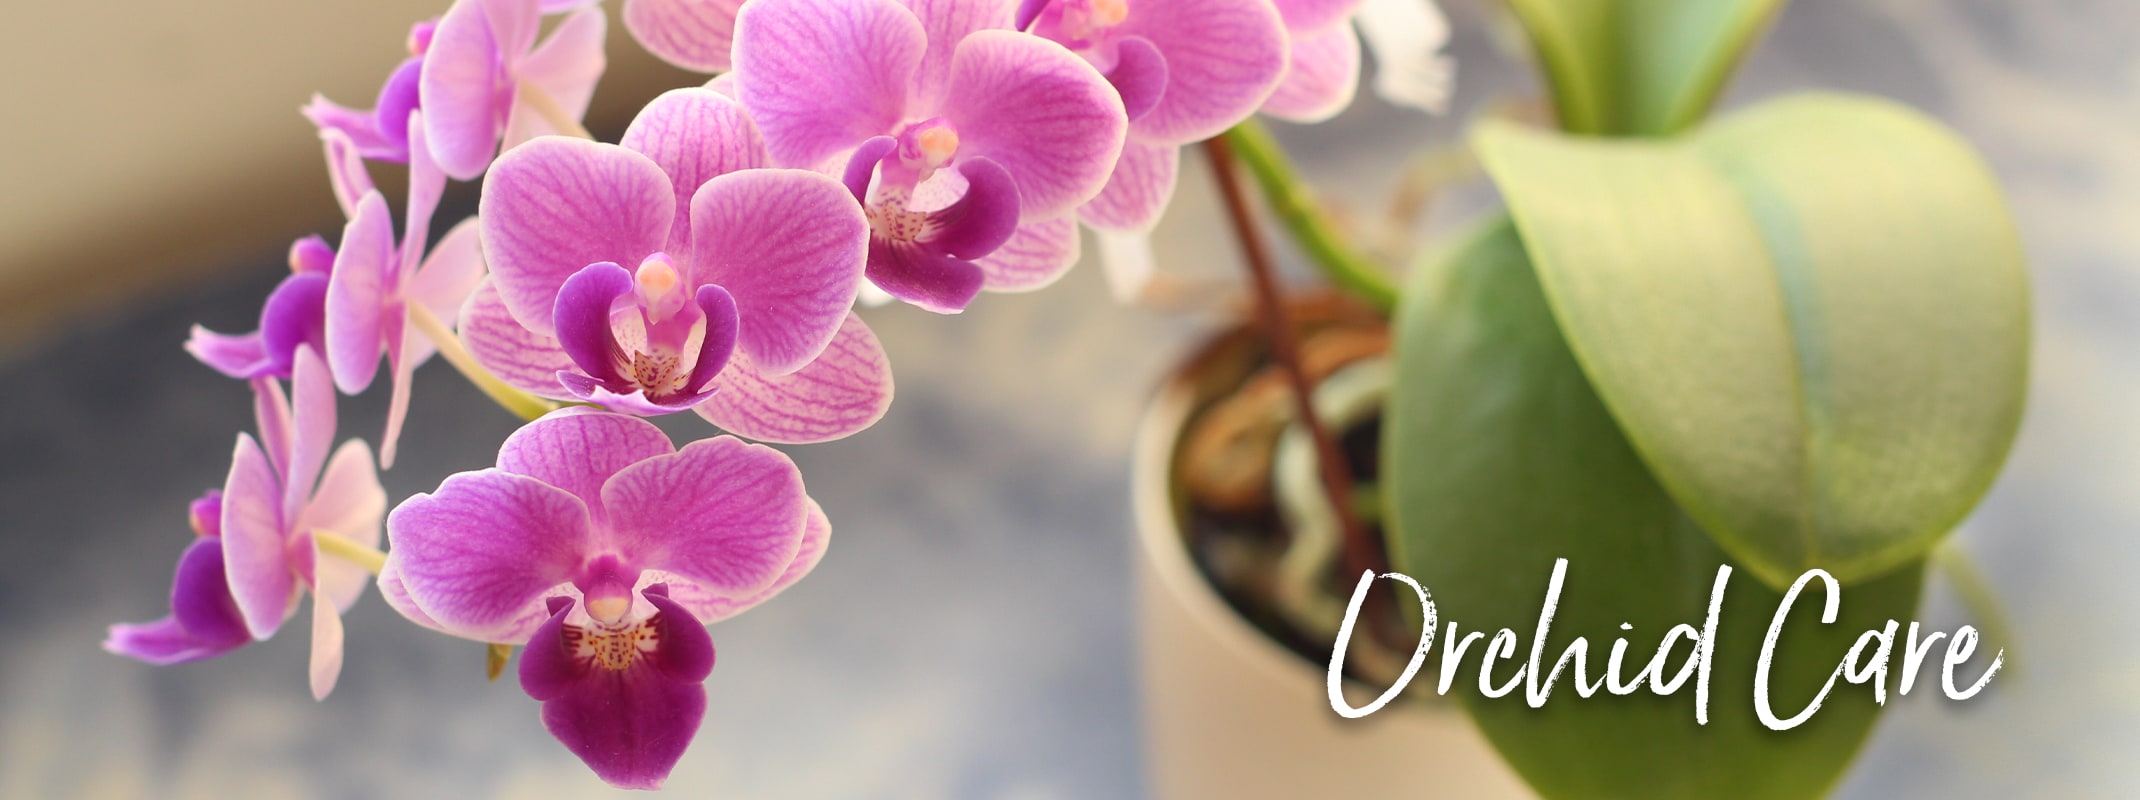 orchid care potted pinkish purple phalaenopsis